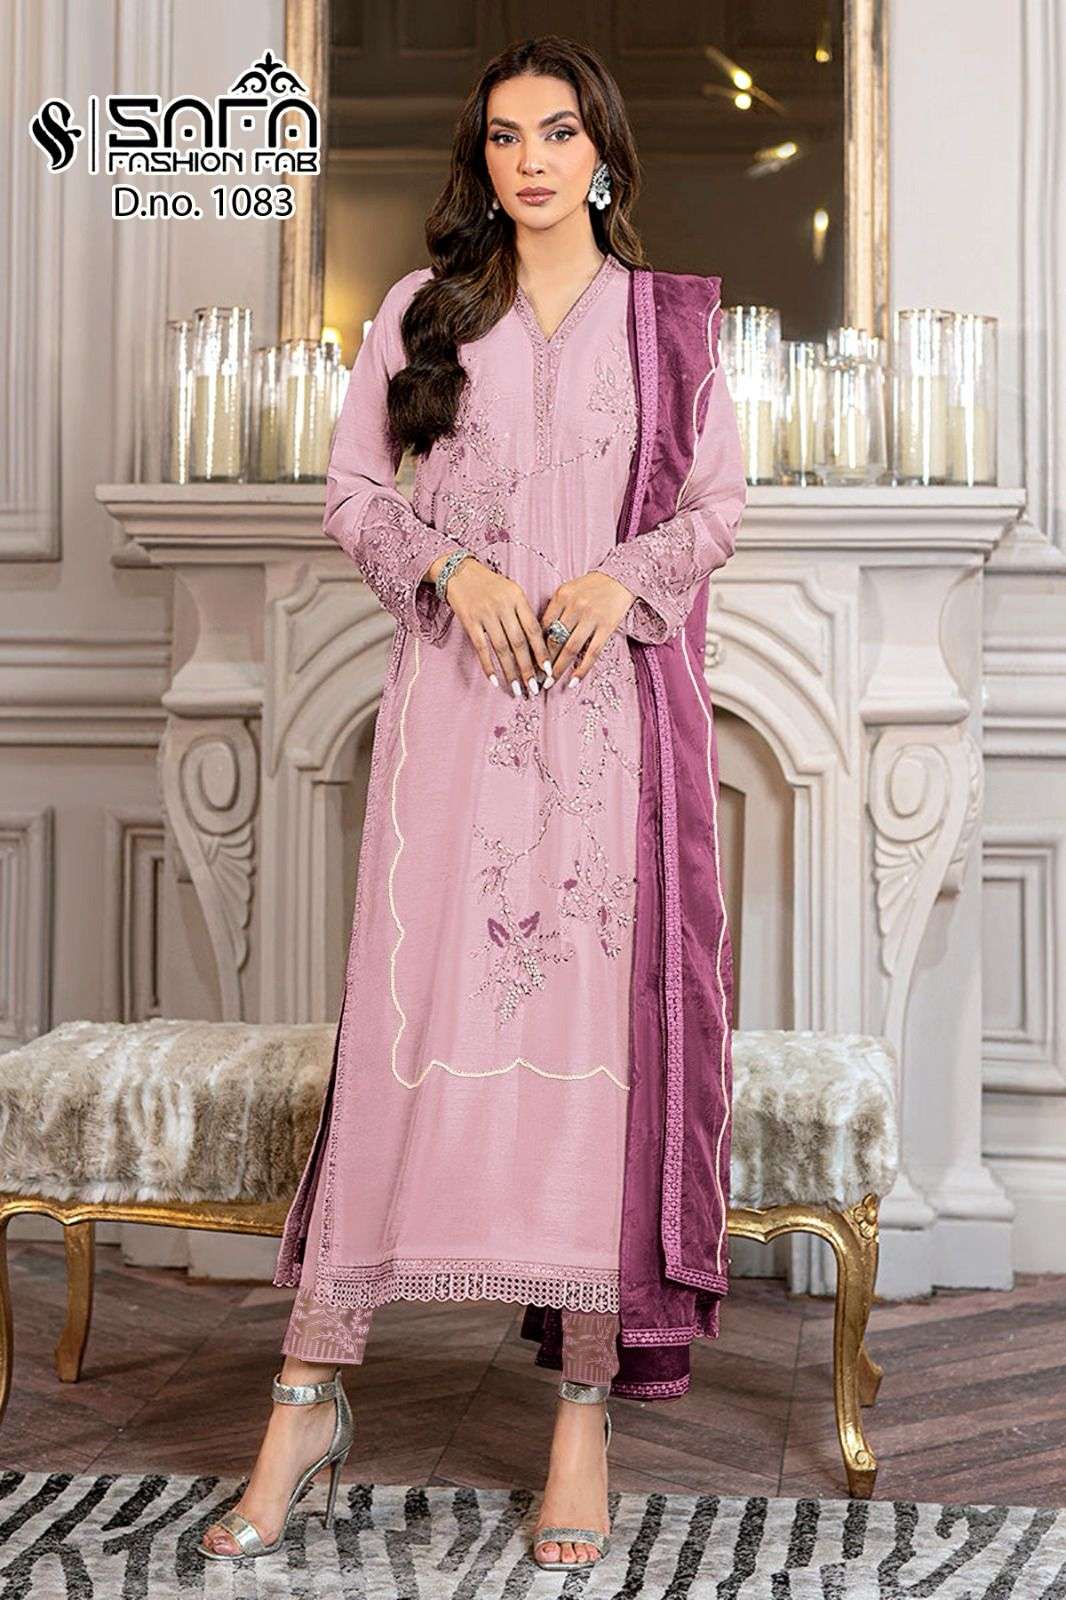 safa fashion hub 1083 colour series latest designe pakistani salwar kameez wholesaler surat gujarat